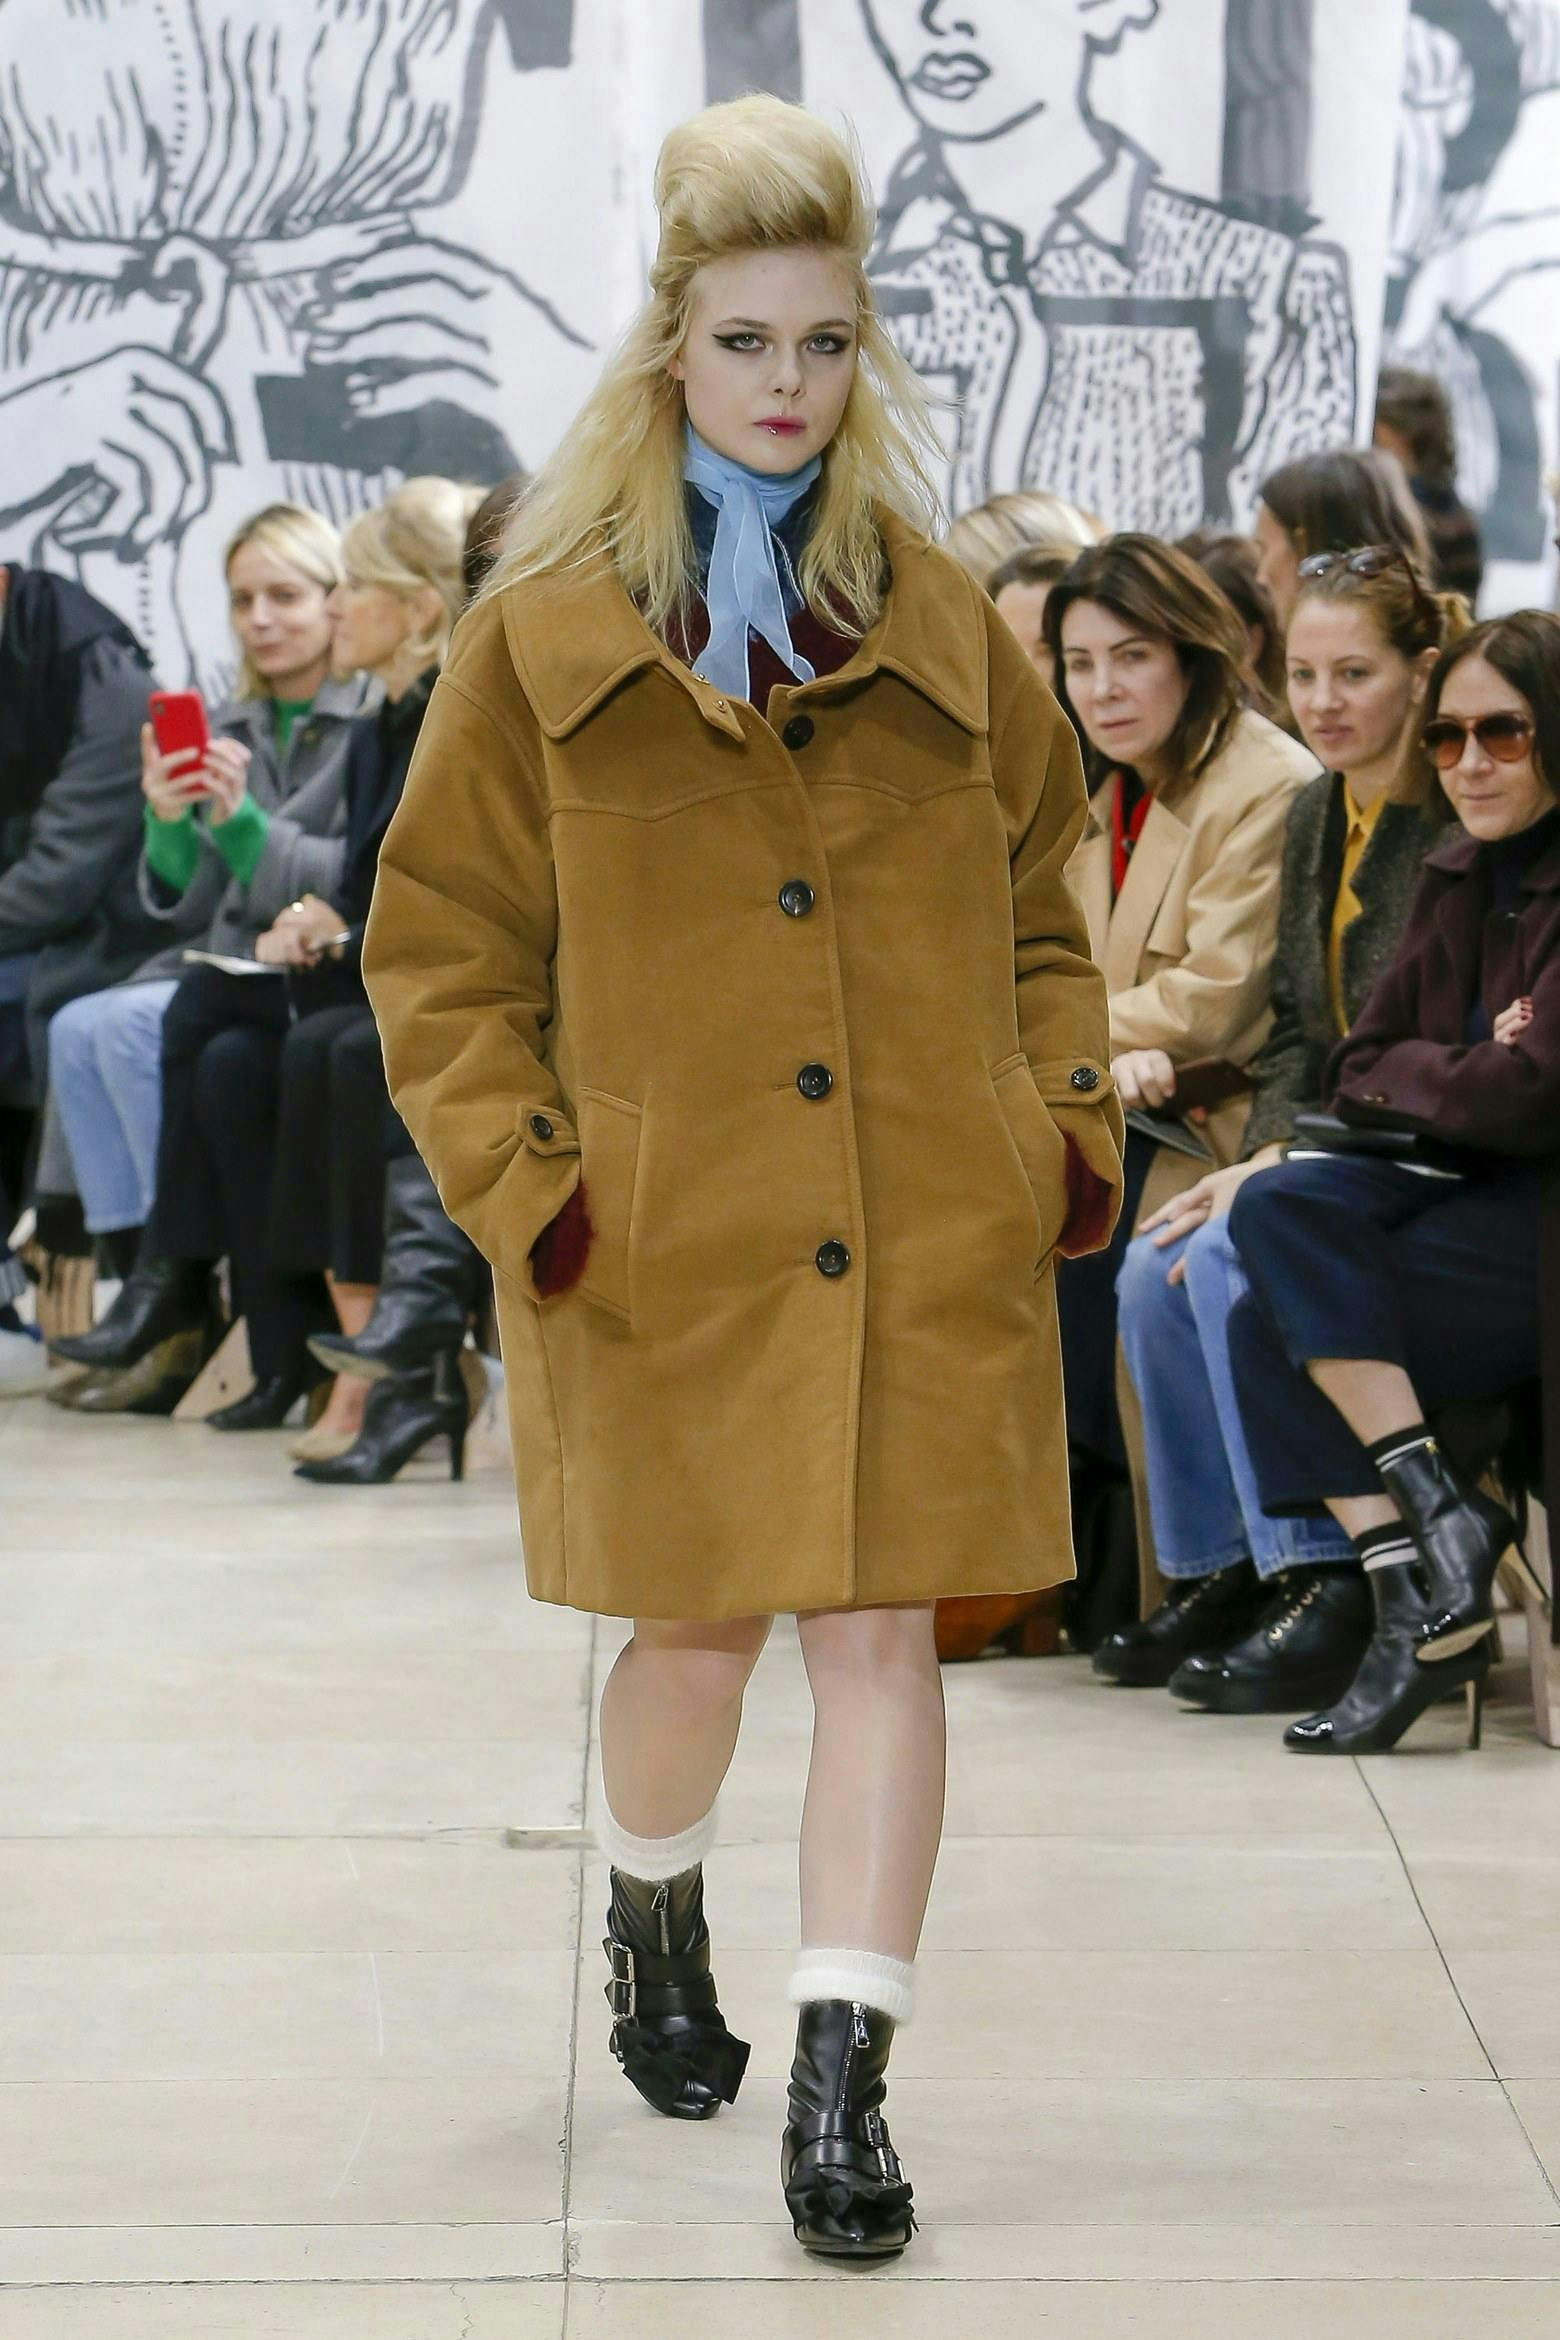 coat clothing apparel person human shoe footwear sunglasses accessories overcoat